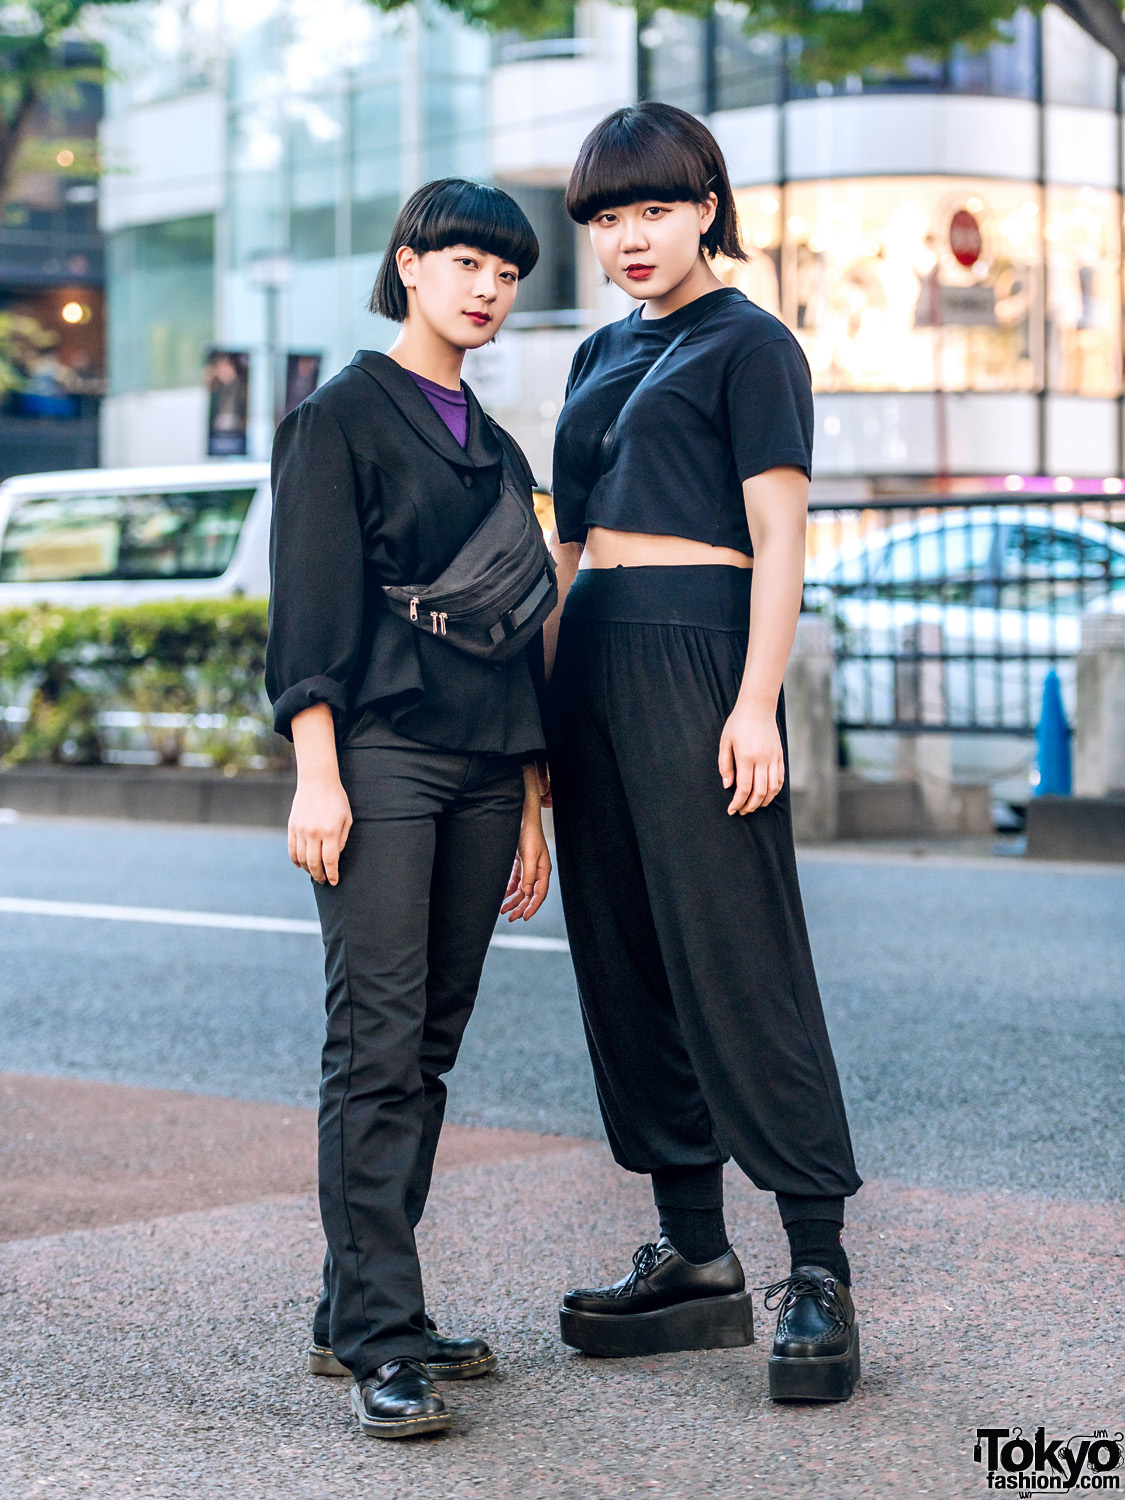 Windswept atlet overrasket All Black Minimalist Streetwear Styles w/ Plaza South, Dickies, Dr.  Martens, Remake UNIQLO & Yosuke Creepers – Tokyo Fashion